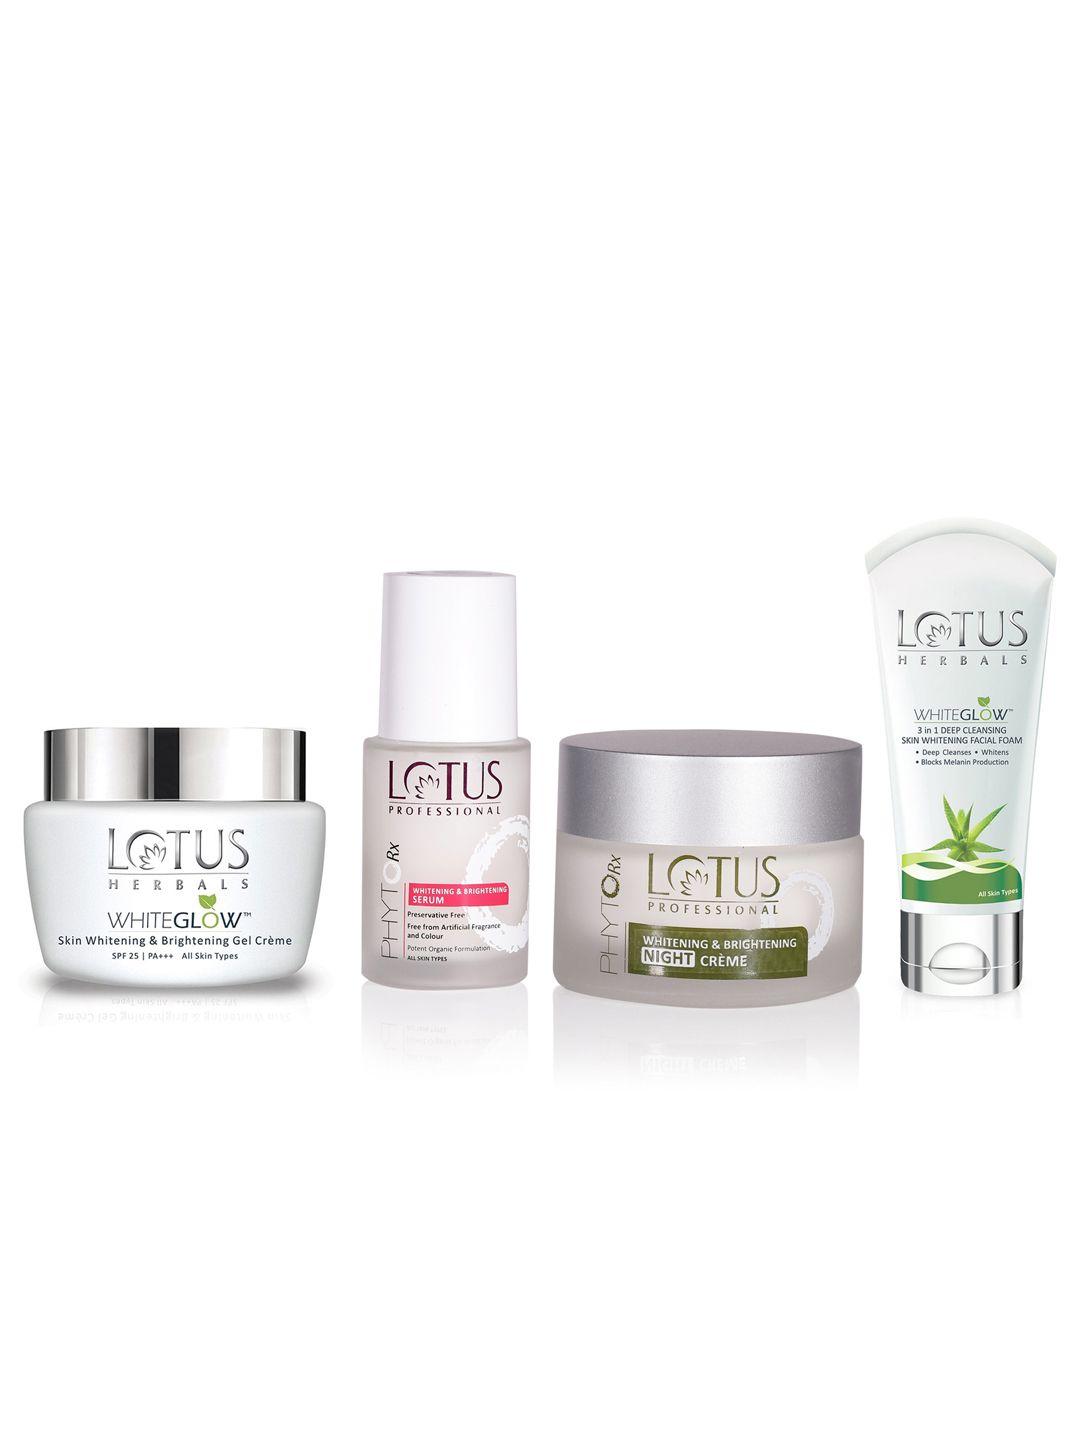 lotus herbals unisex white glow & phytorx sustainable skin care kit